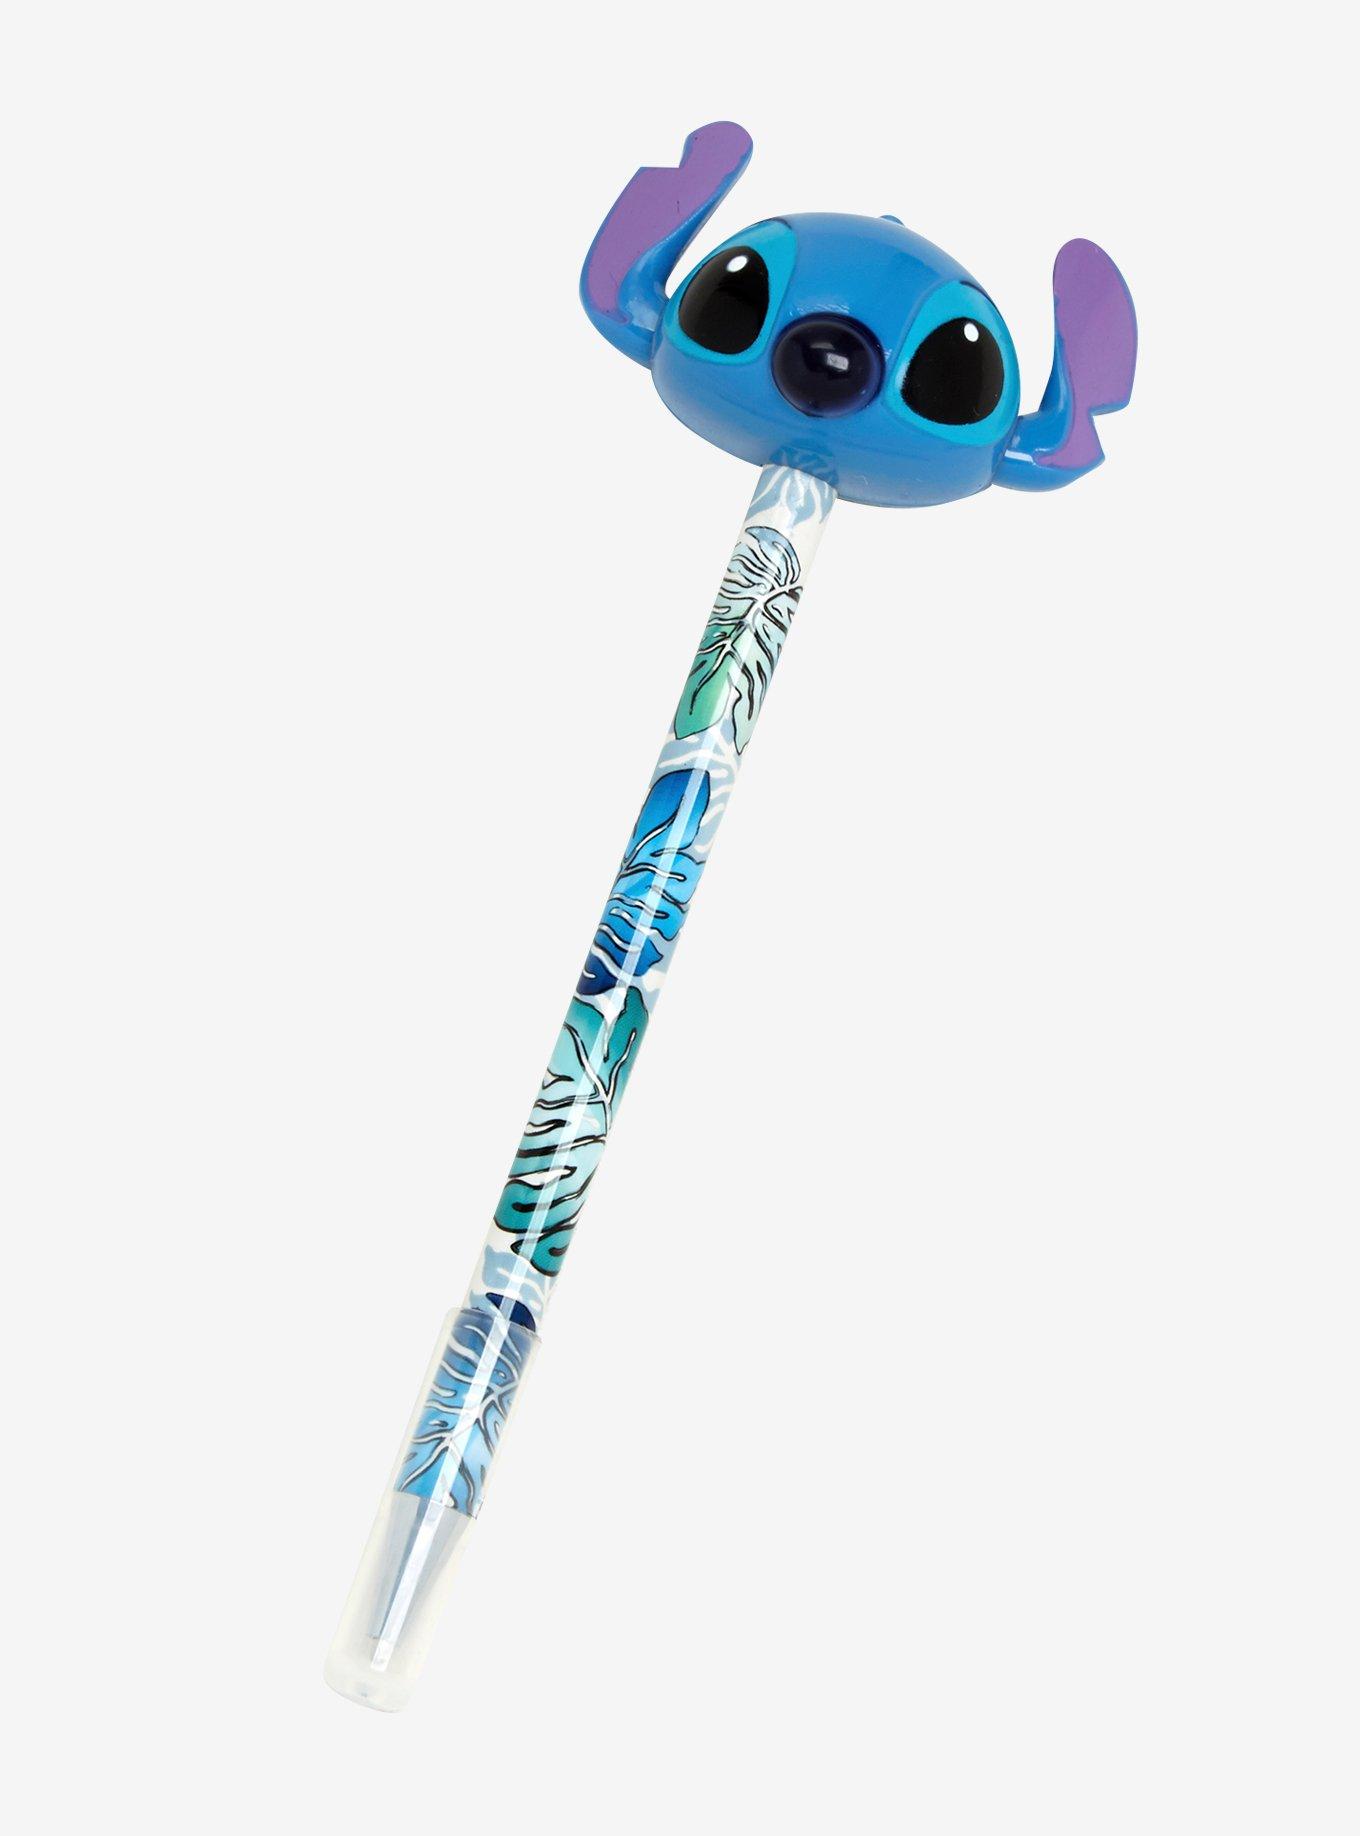 Disney Lilo & Stitch Stand-Up Stitch Pencil Case, Hot Topic